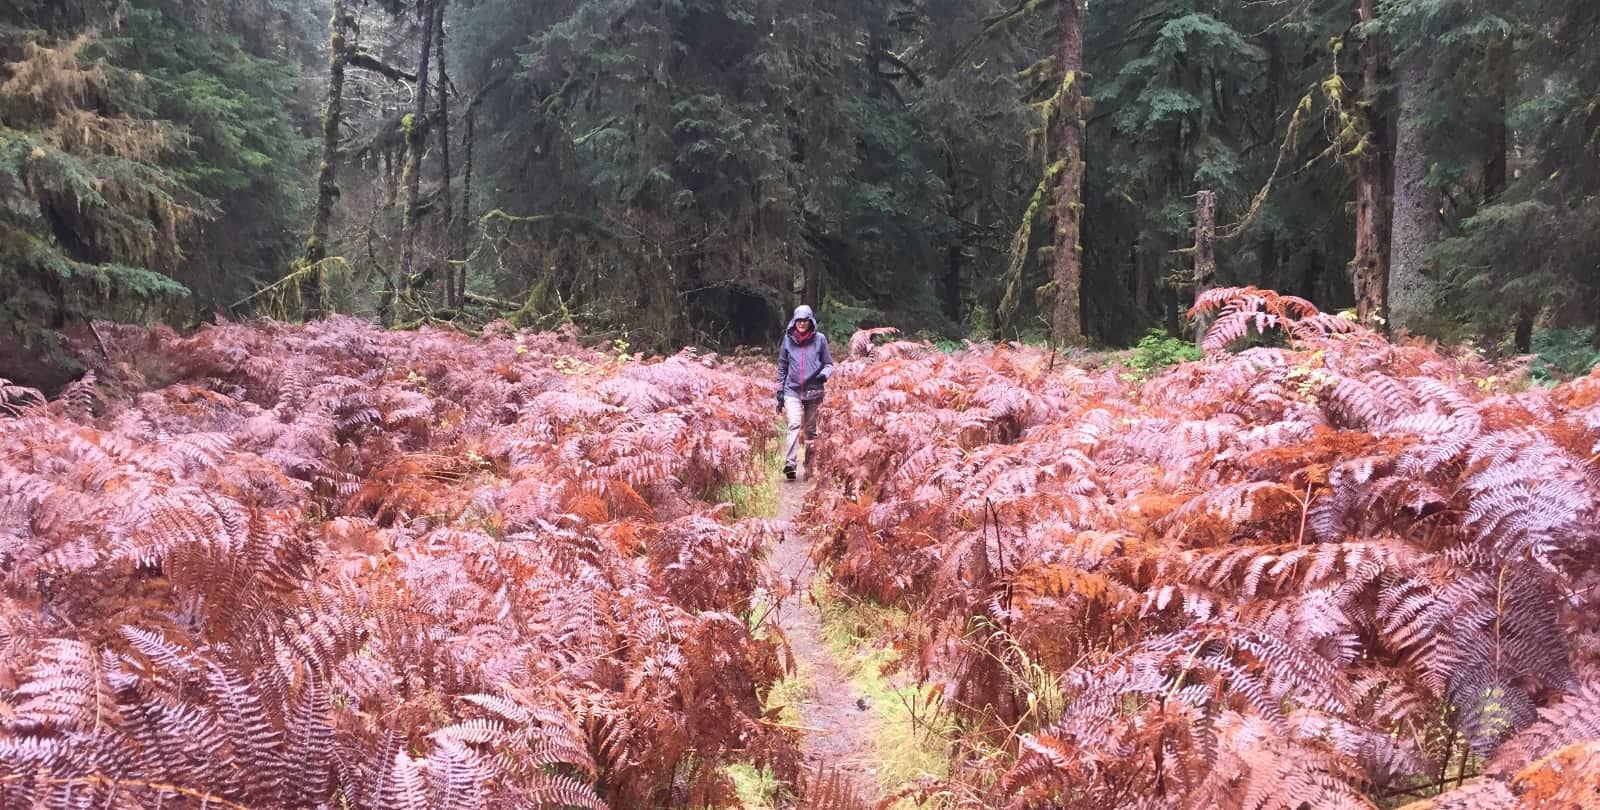 Hikerwalking through red fern field in rain